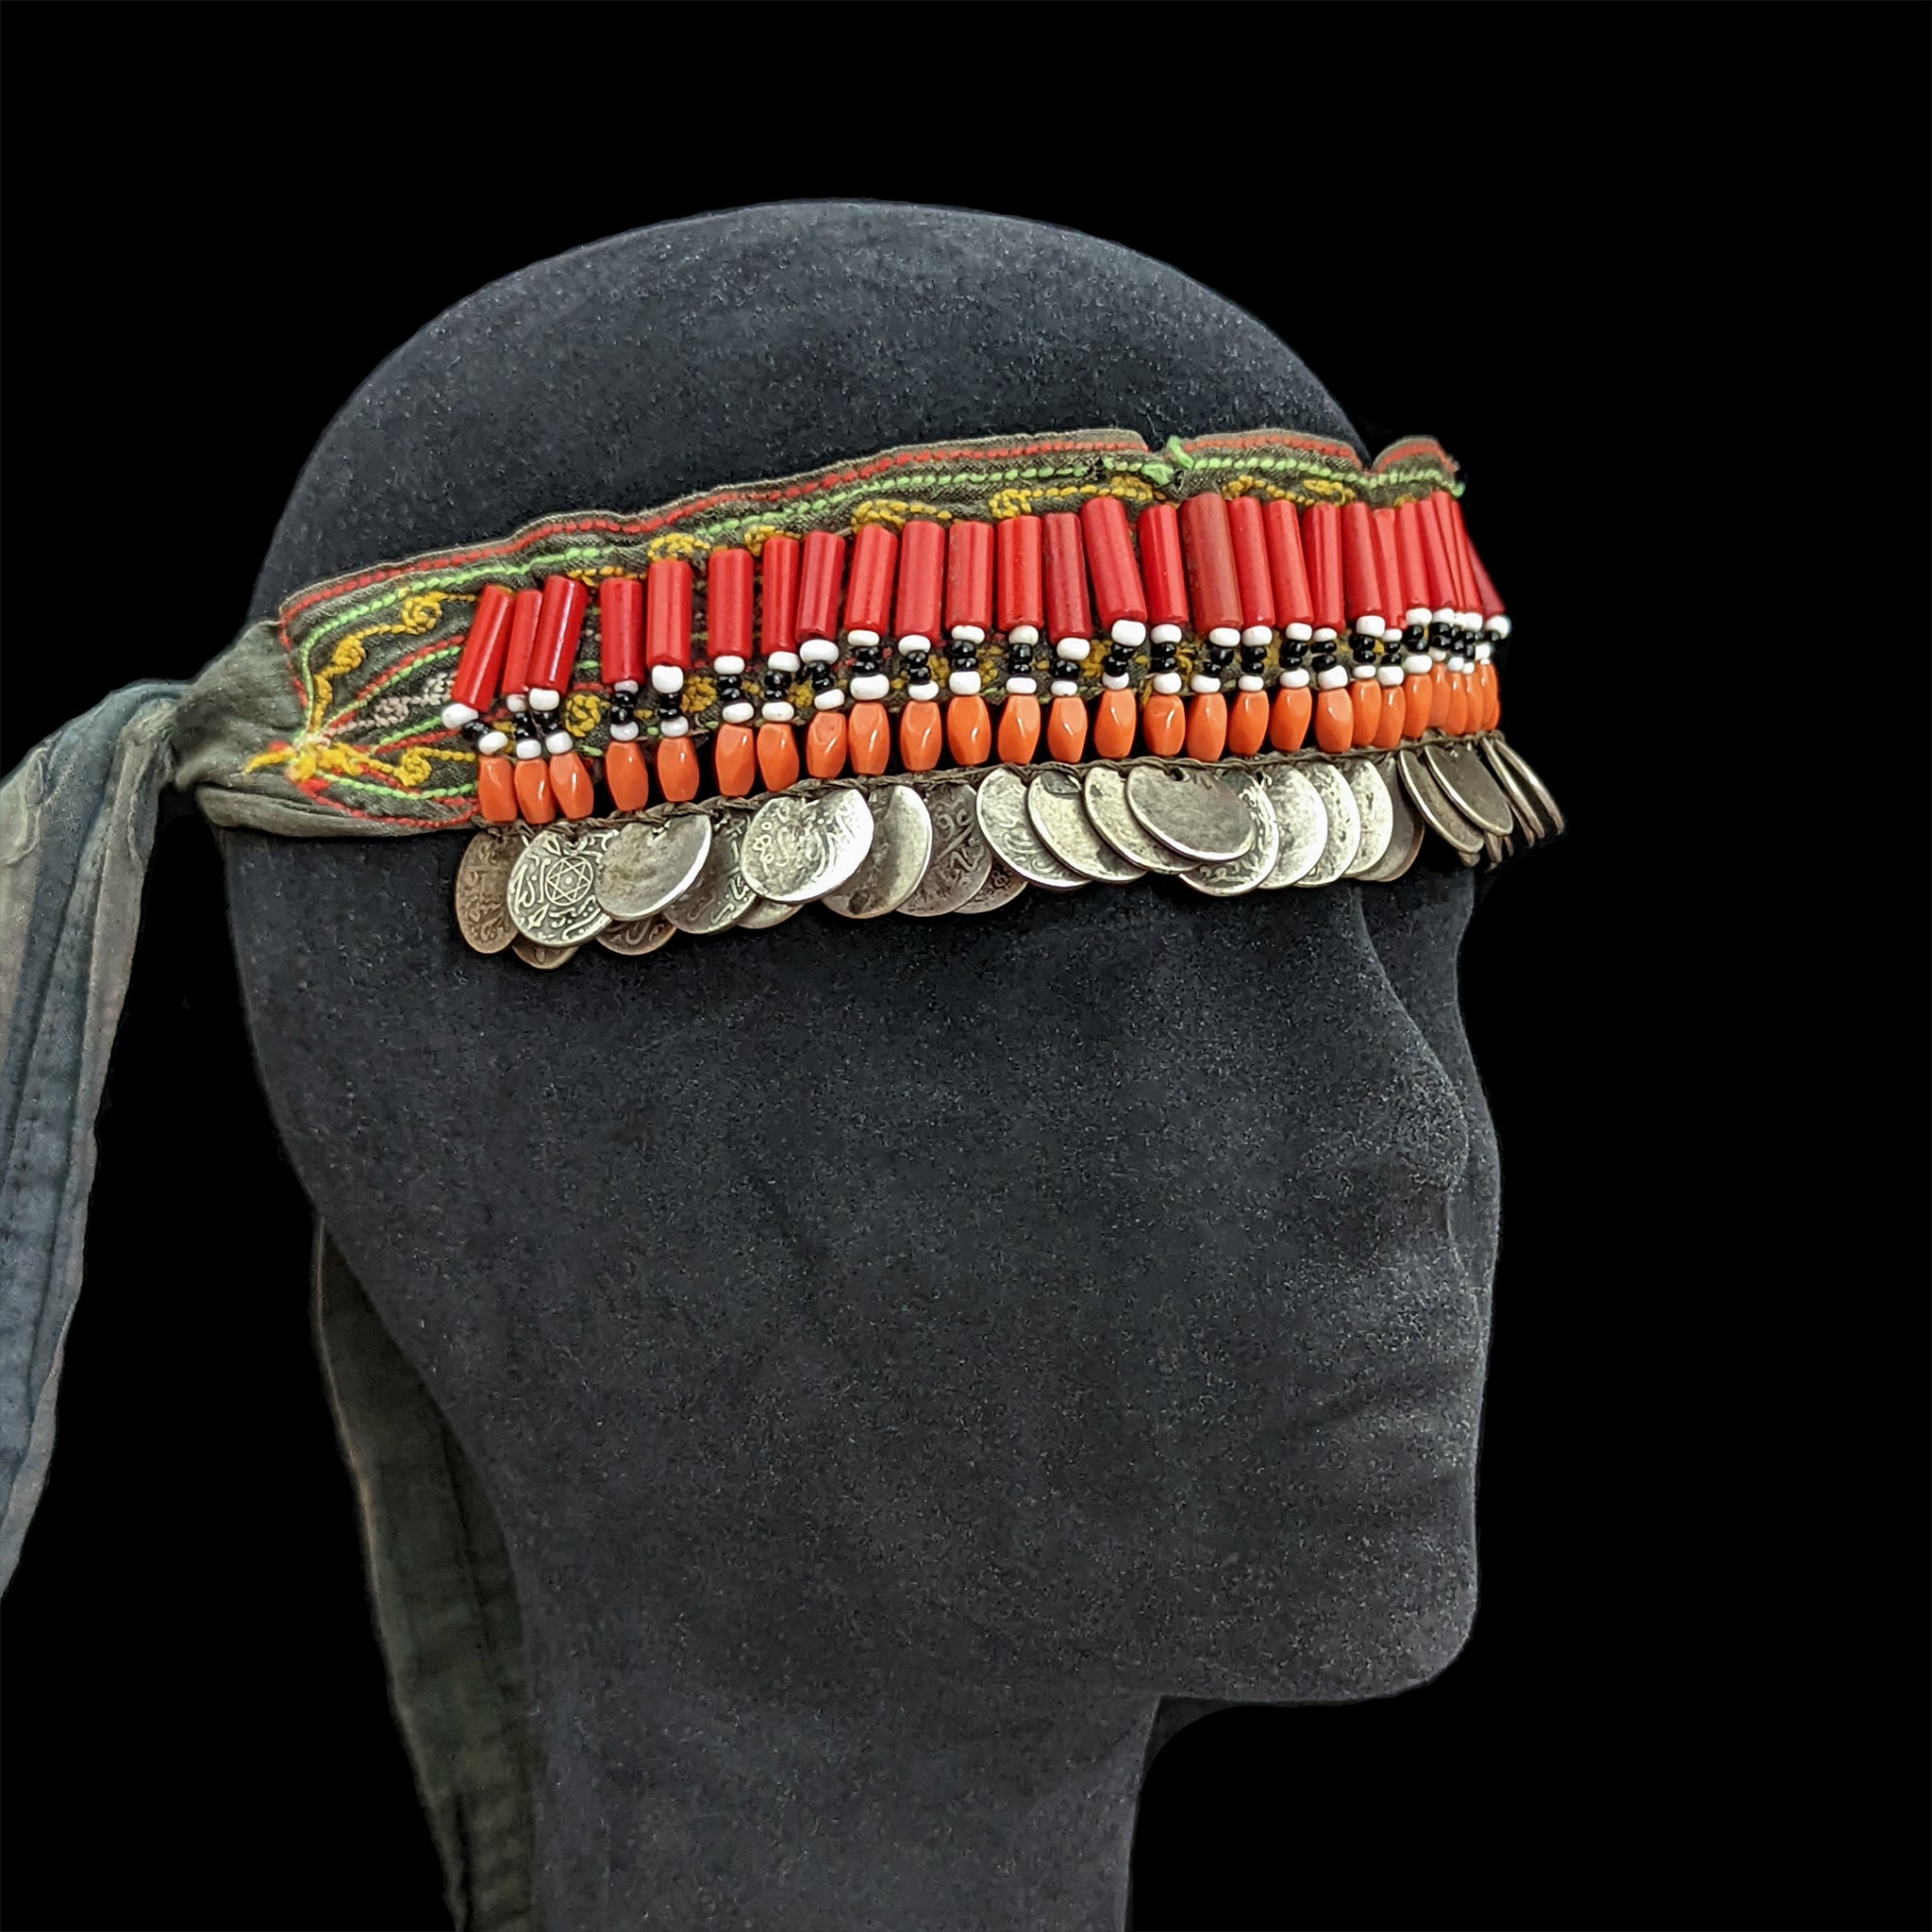 Antique Taounza Headdress, Akhsass, Morocco - Rare